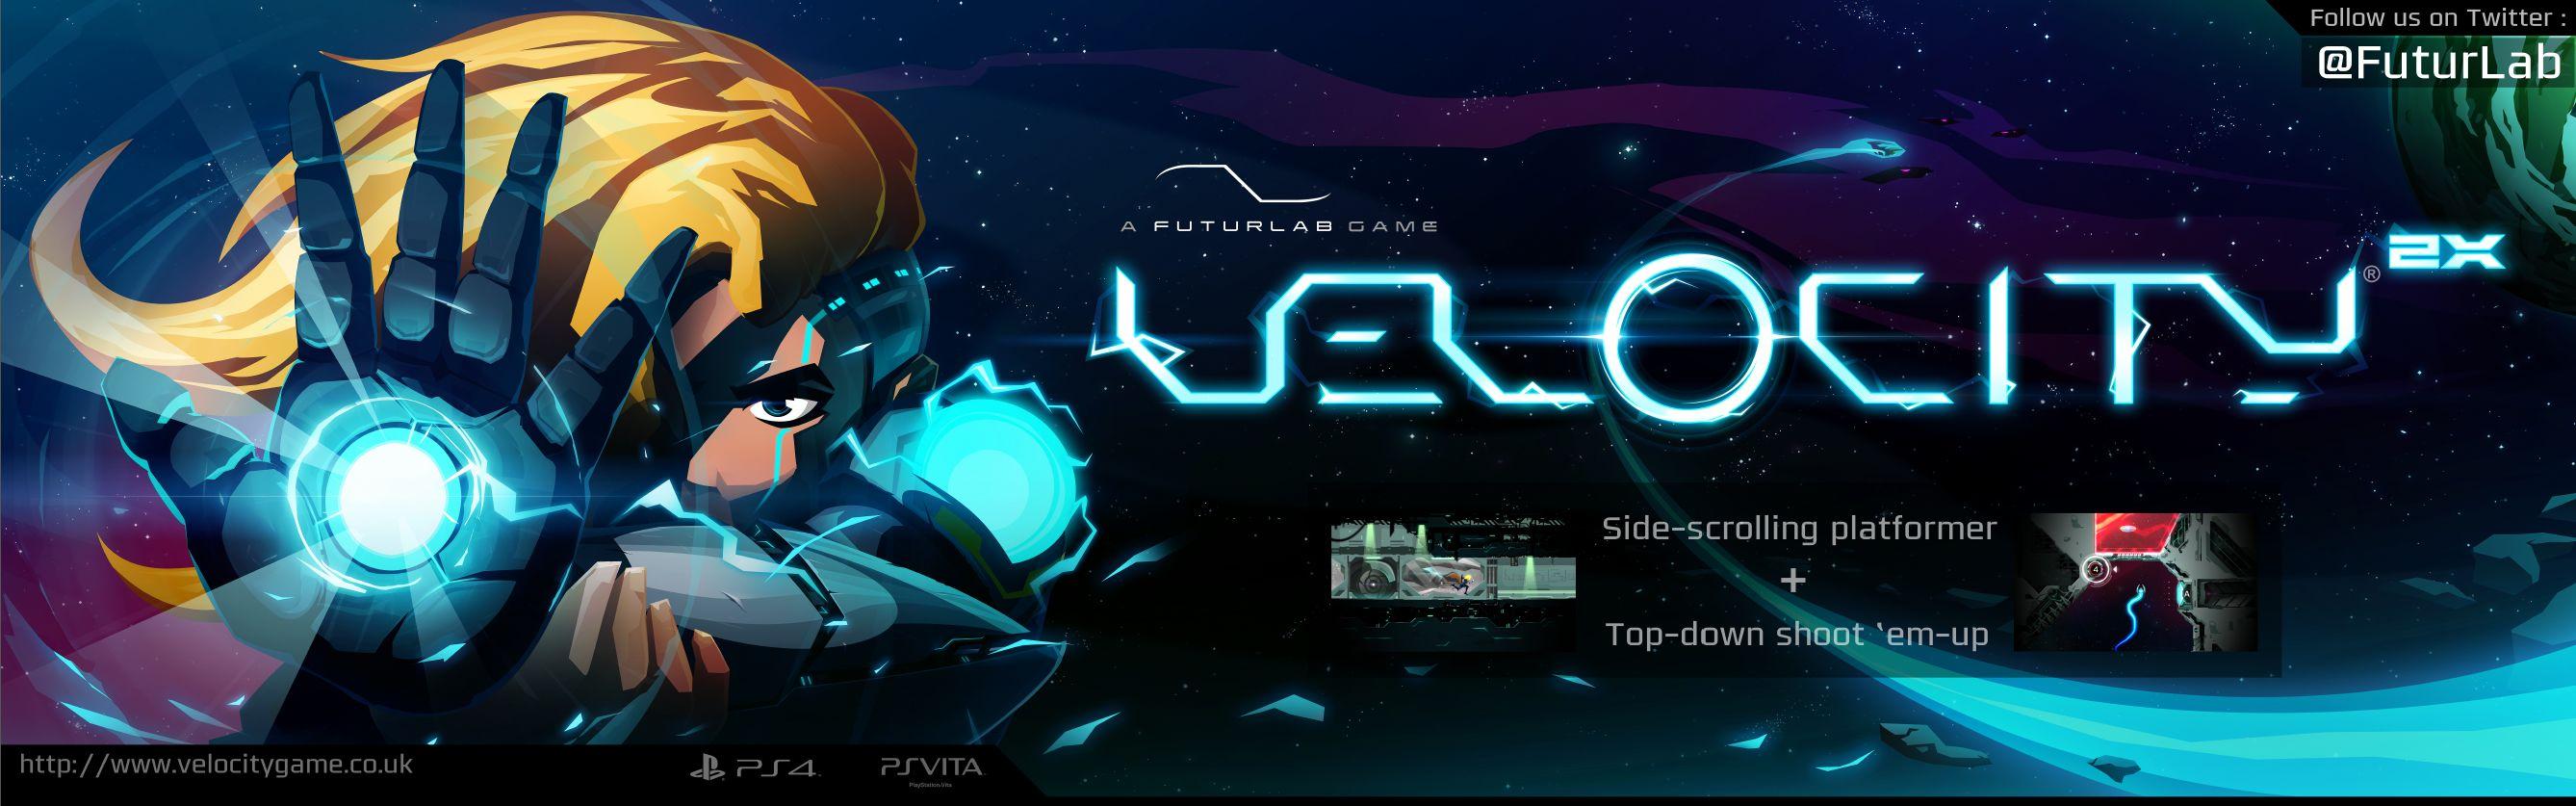 Velocity 2X: Critical Mass Edition Final Release Date Announced